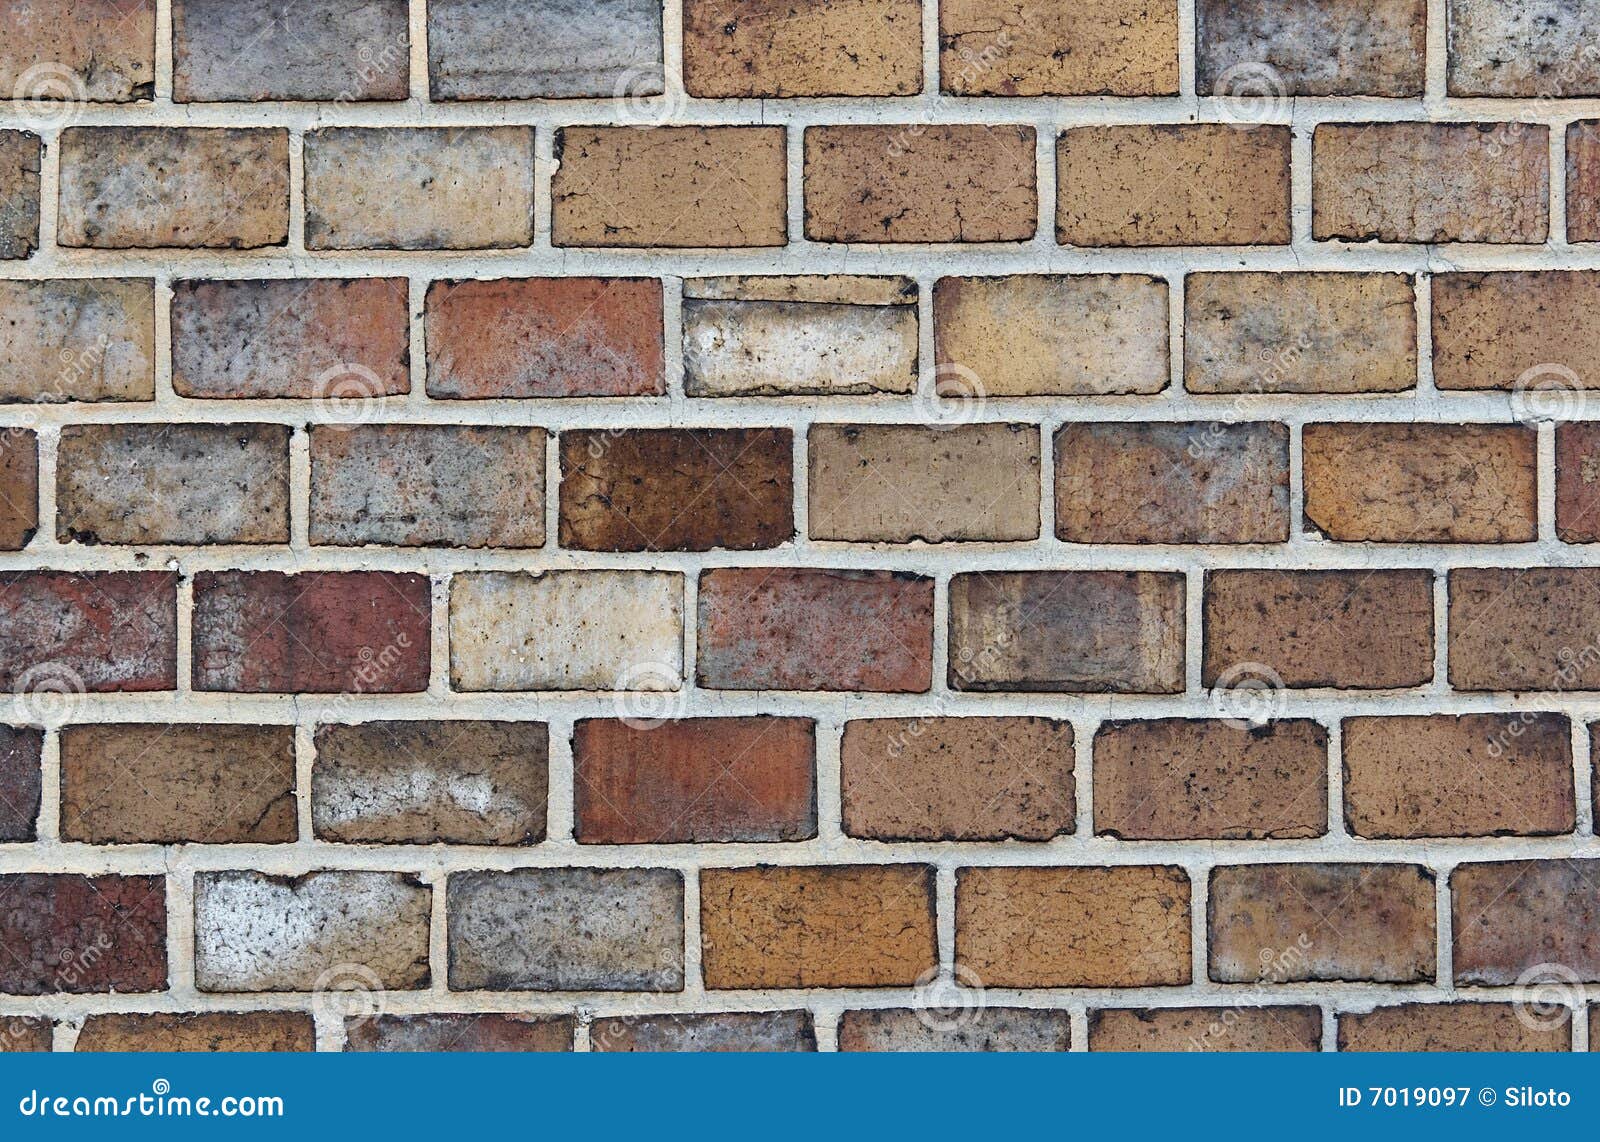 brickwork - wall